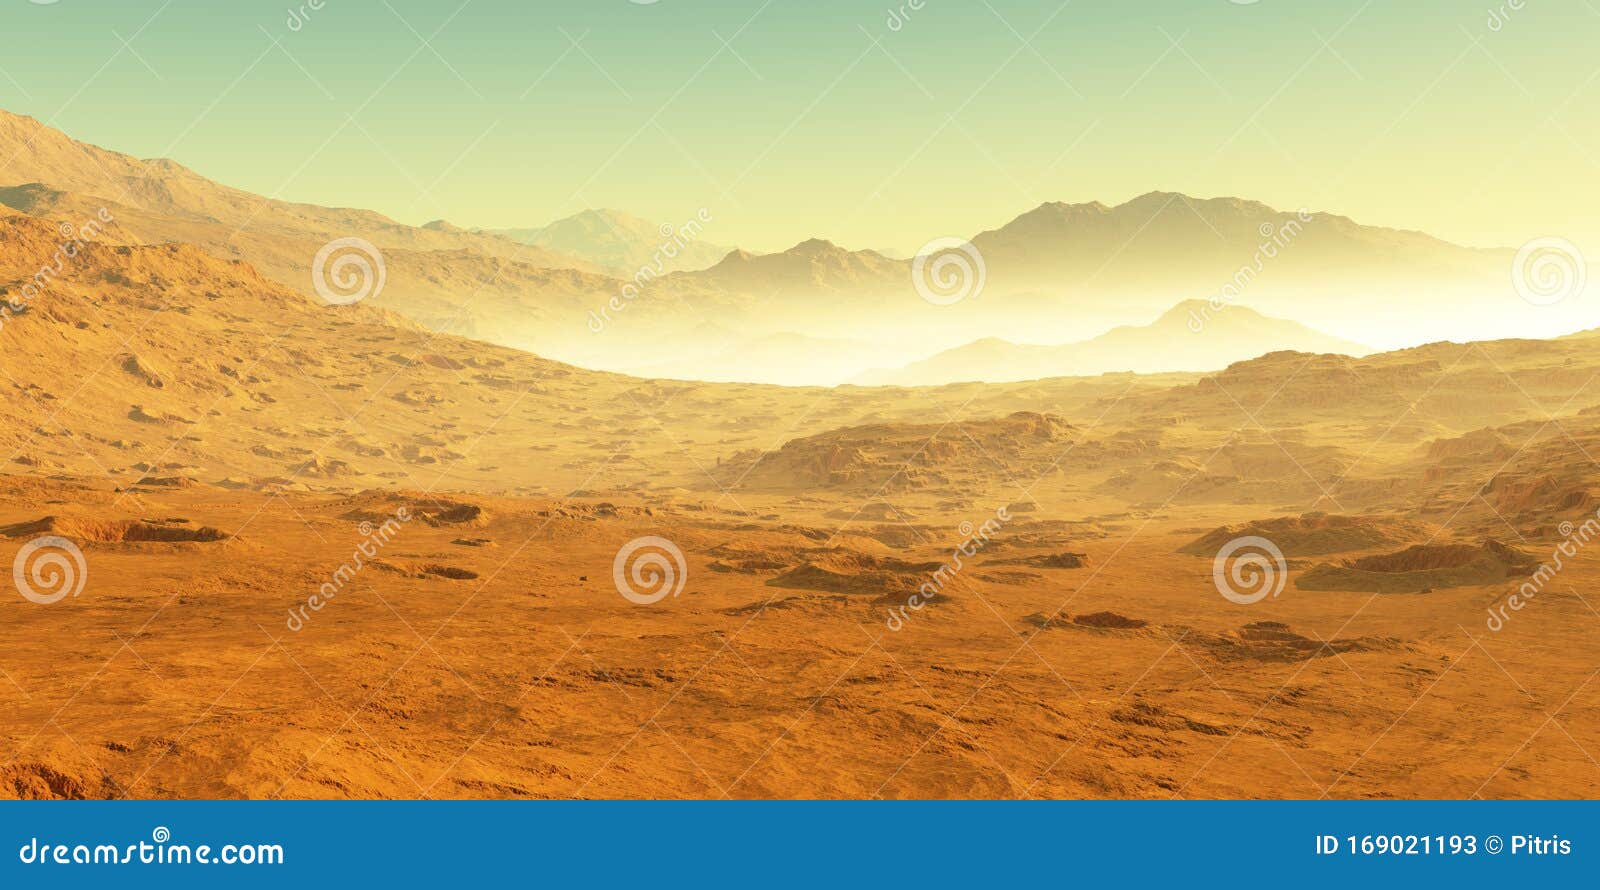 cold desert on mars. martian landscape